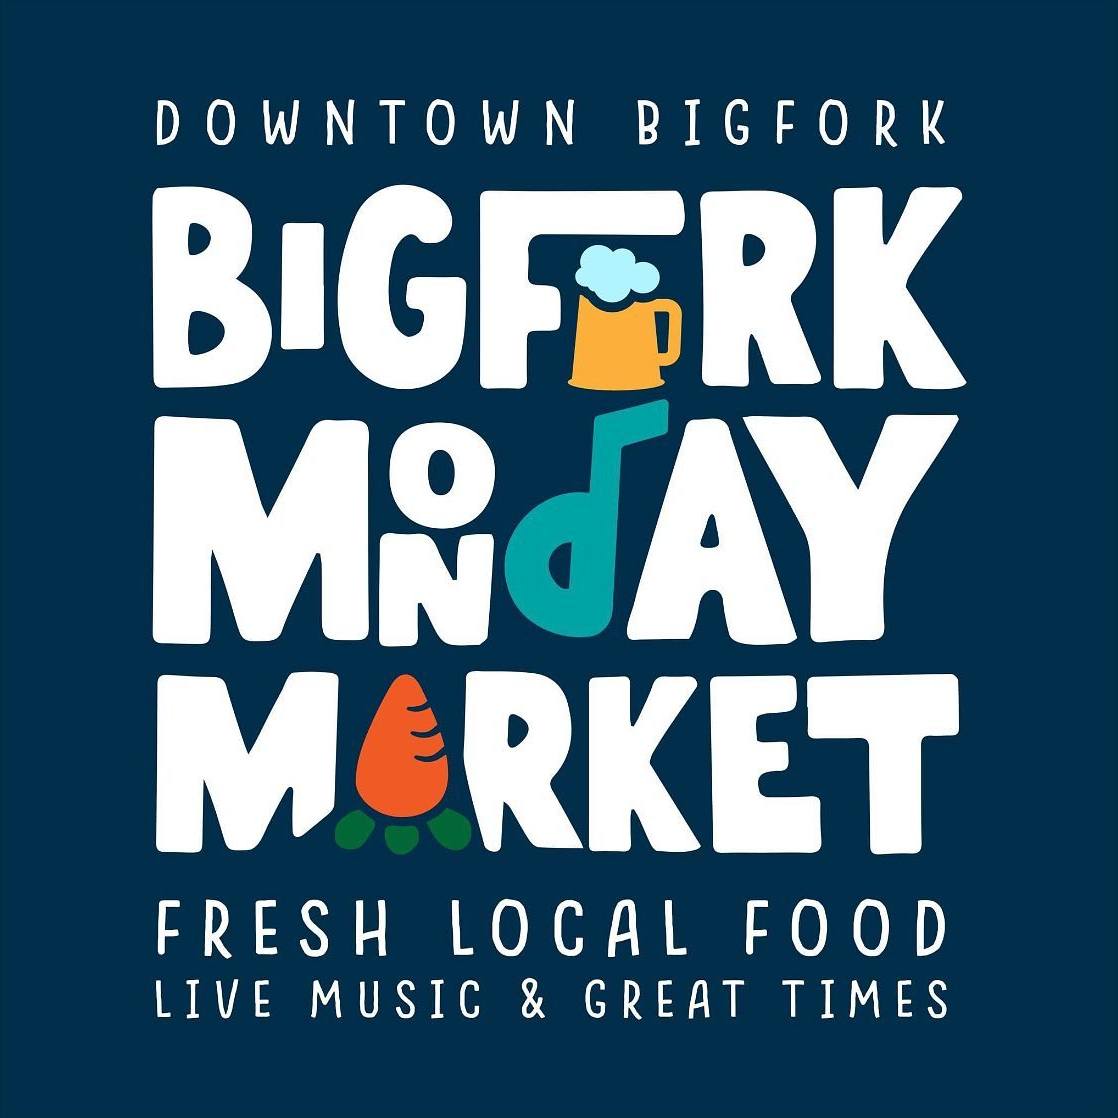 Bigfork Monday Market in Bigfork